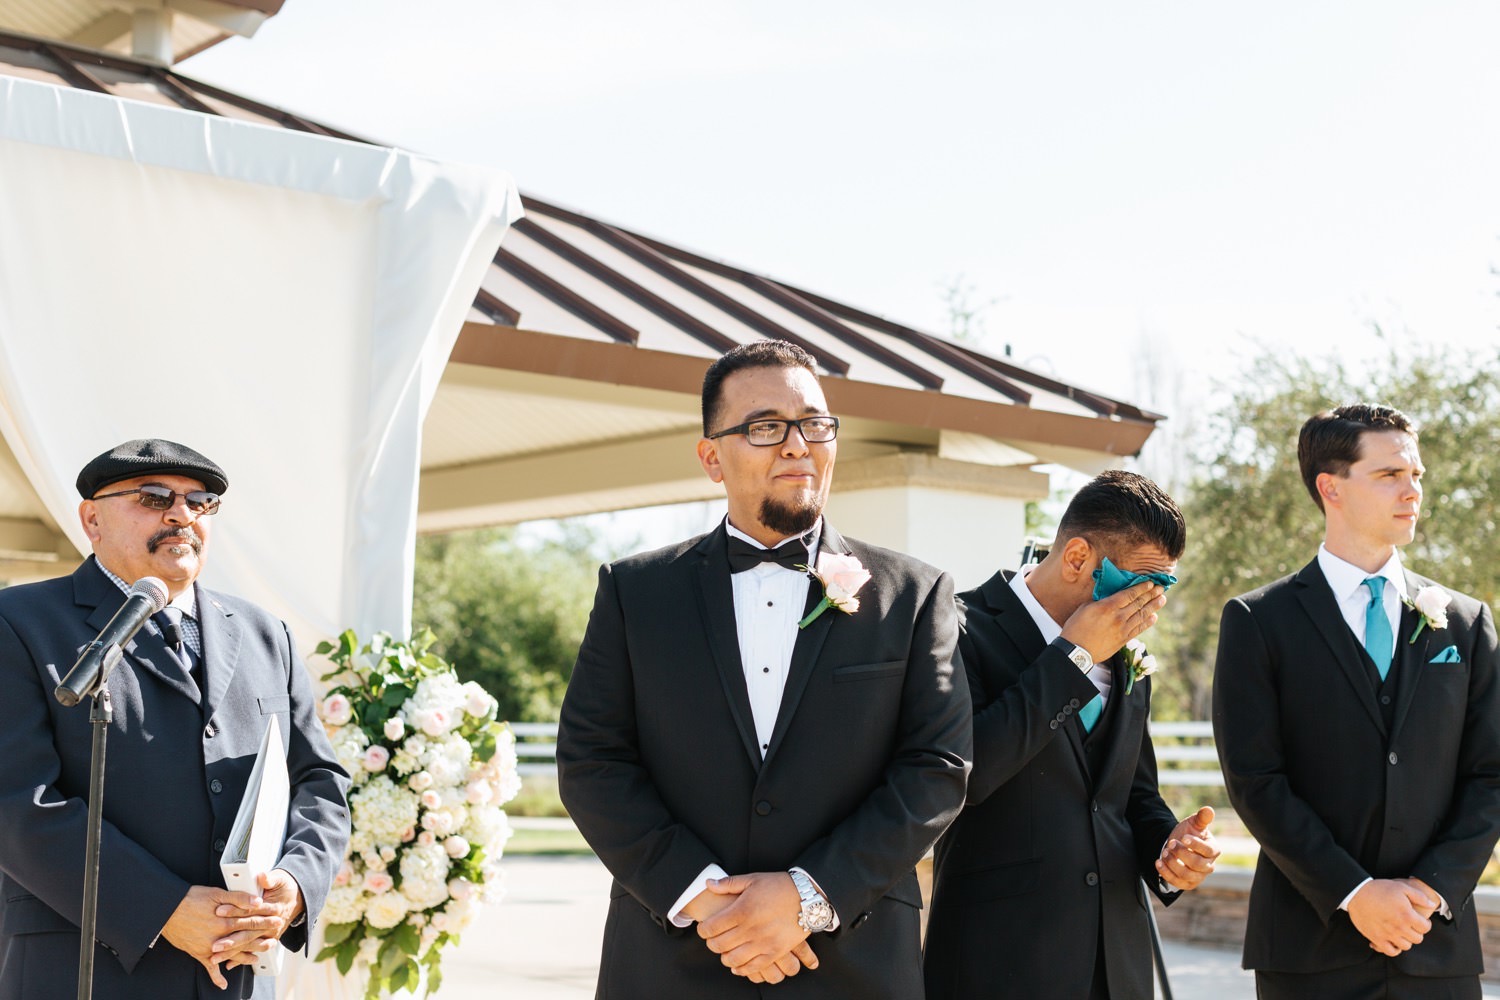 Chino Hills Community Center Wedding - Southern California Wedding Photographer - https://brittneyhannonphotography.com